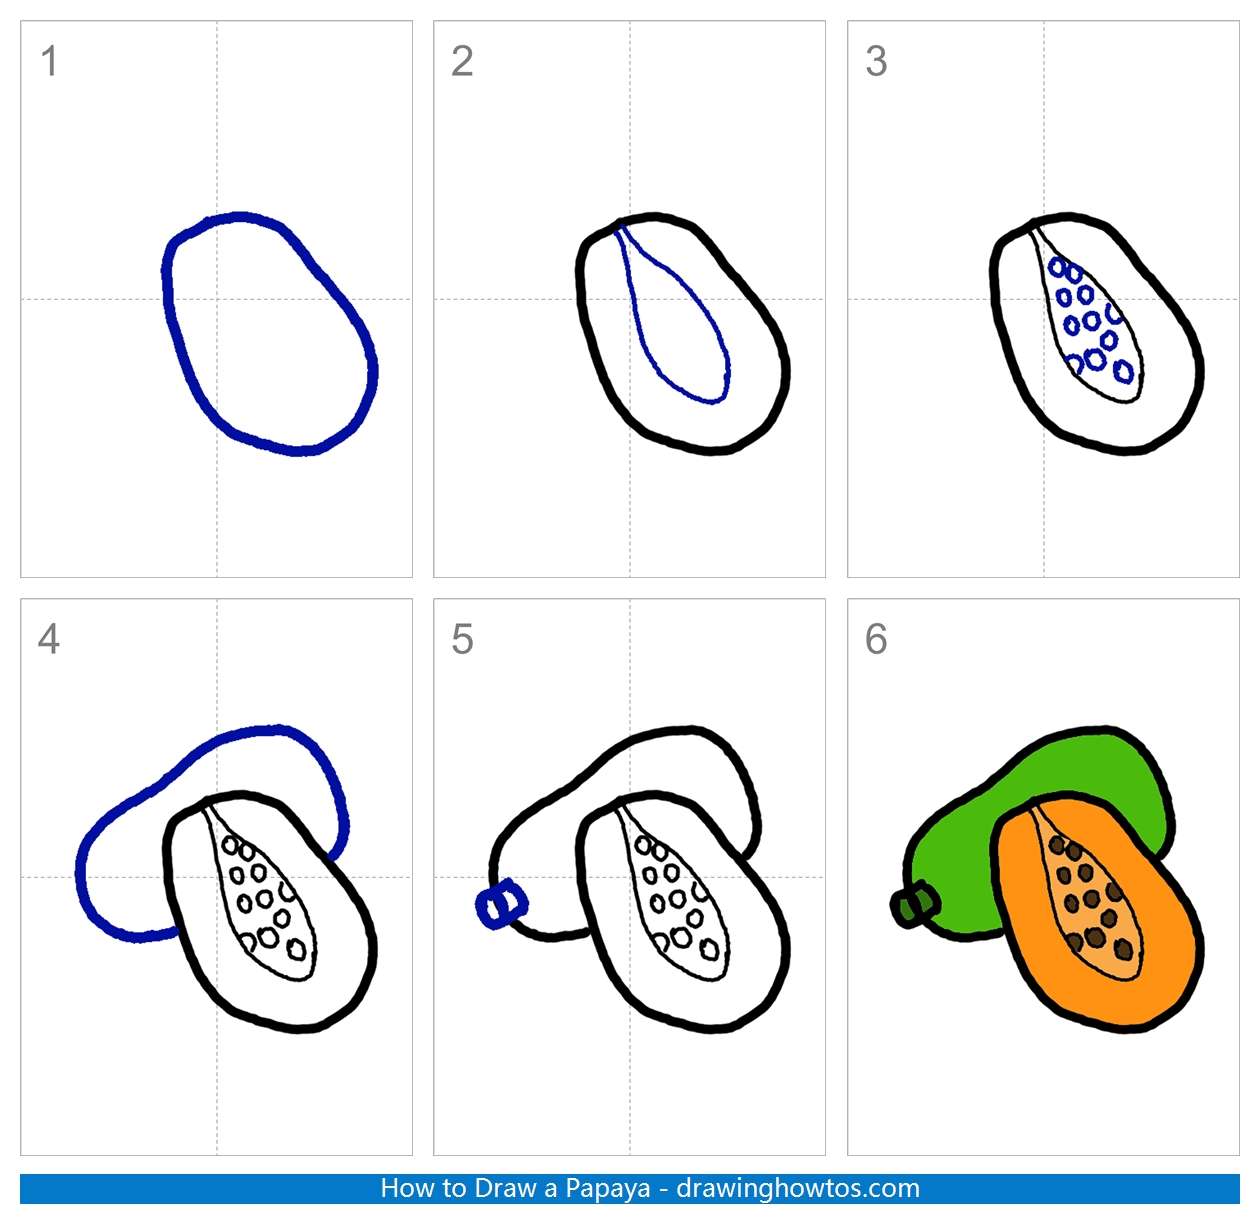 How to Draw a Papaya Step by Step